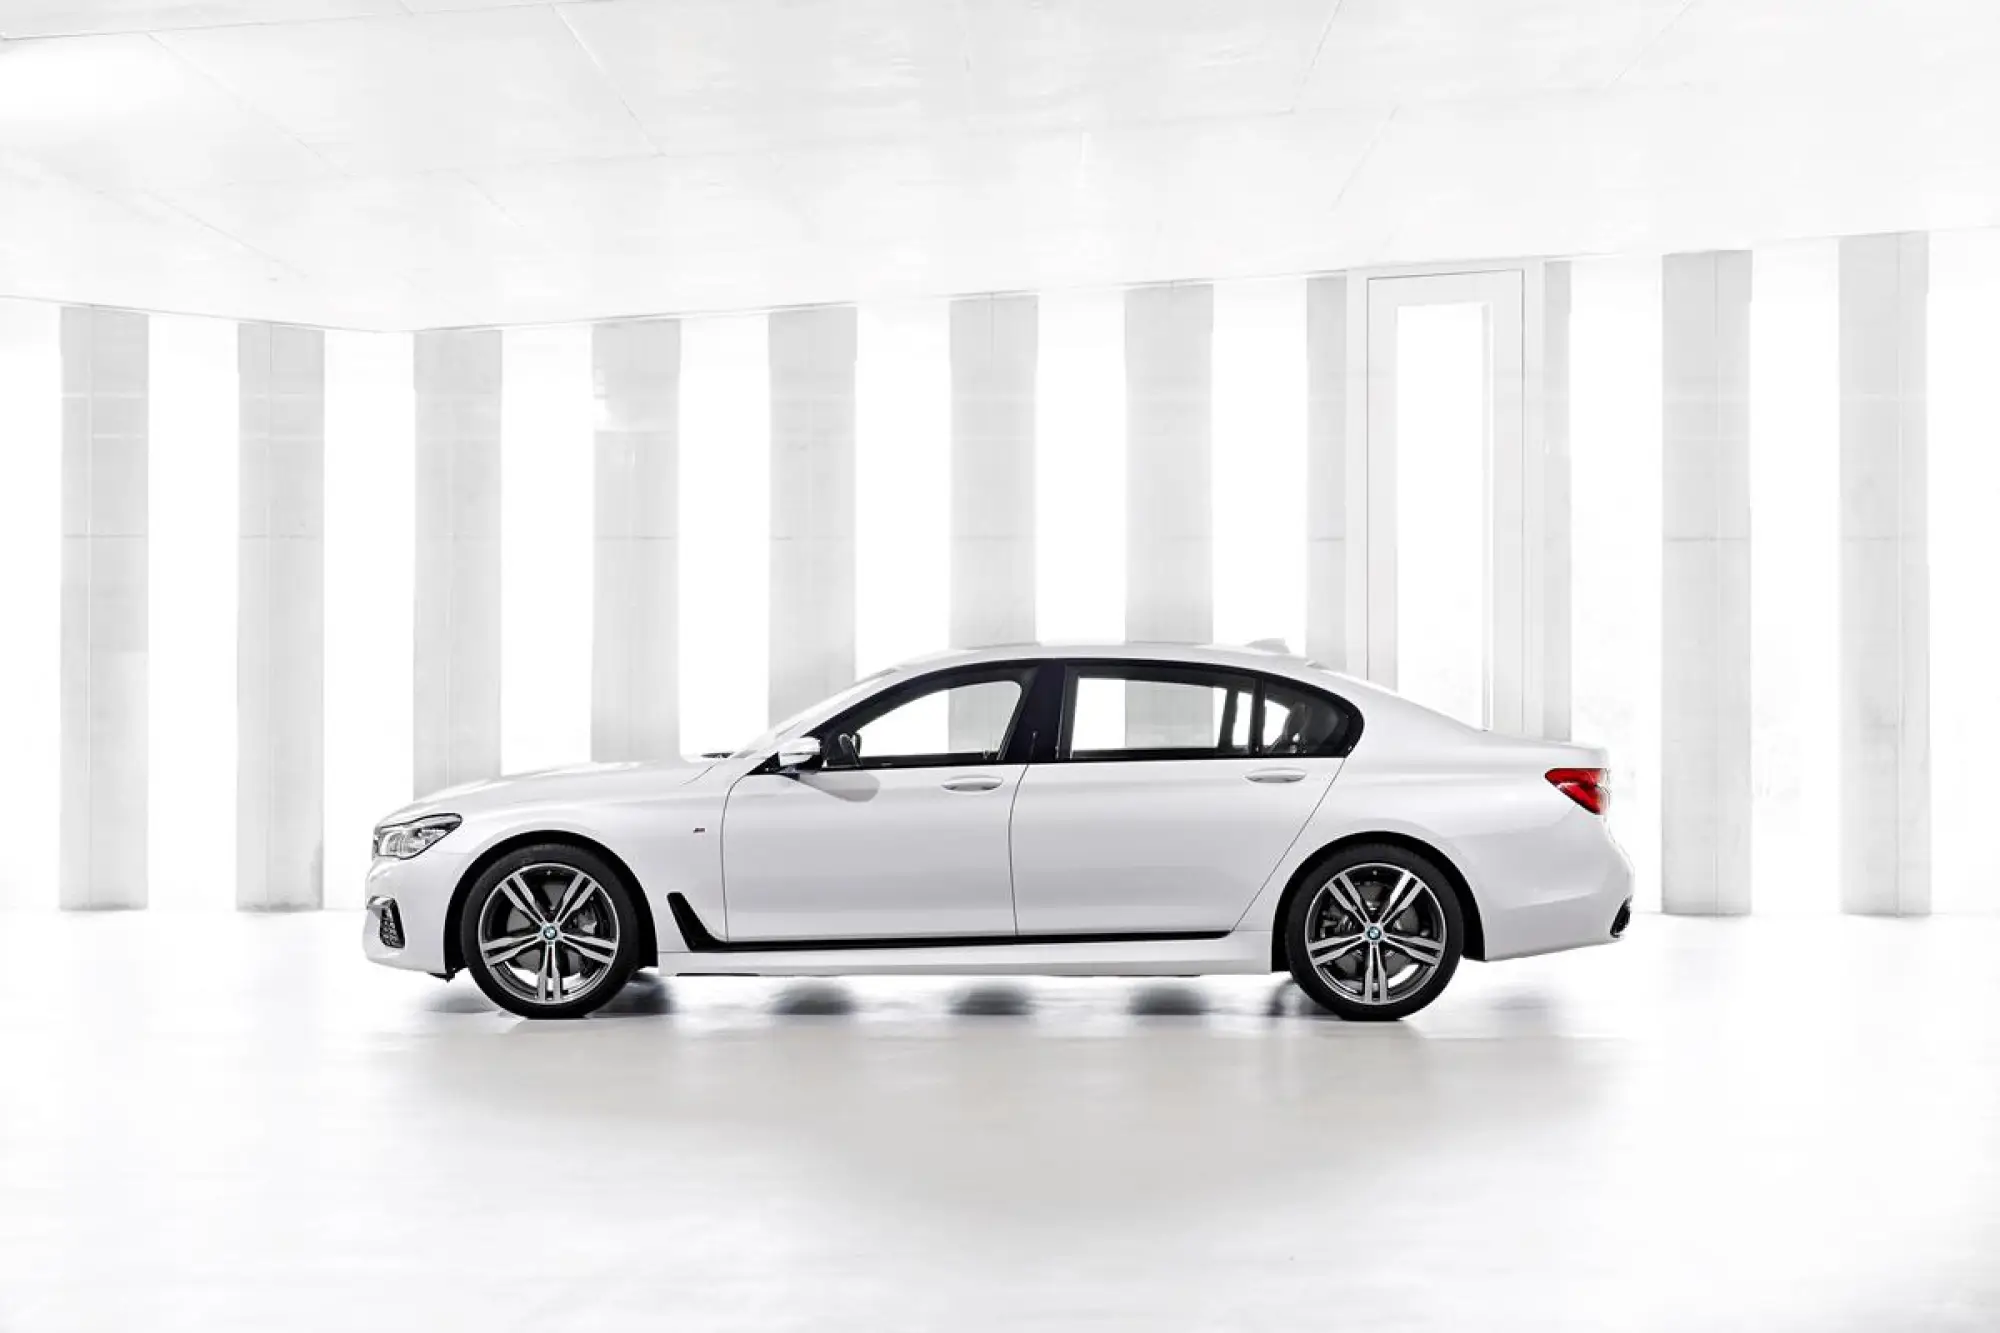 BMW Serie 7 MY 2016 - Nuove foto ufficiali - 48